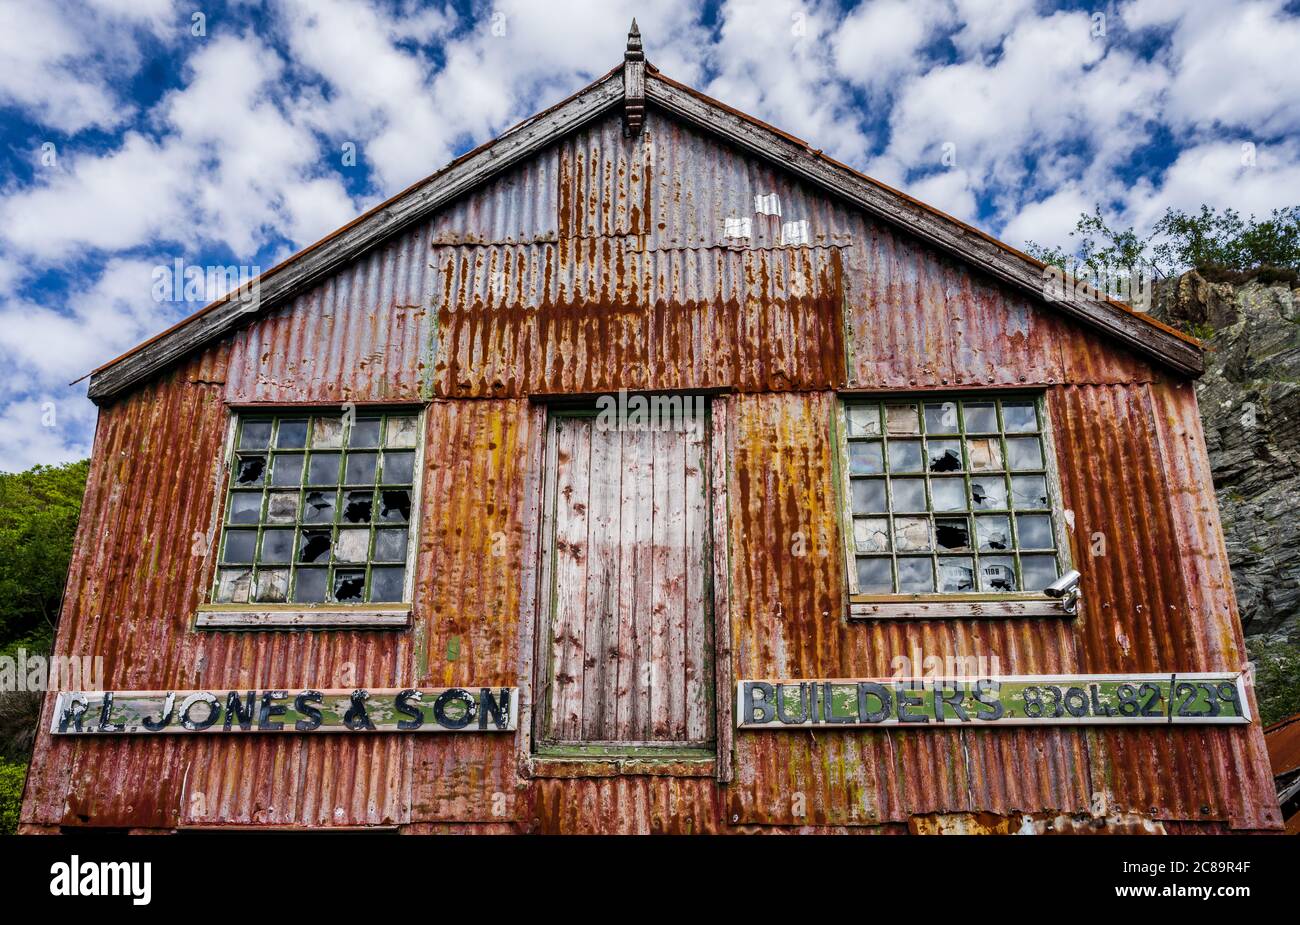 Blaenau Ffestiniog - Painted corrugated iron workshop & shed in the slate mining town of Blaenau Ffestiniog in Snowdonia, North Wales Stock Photo